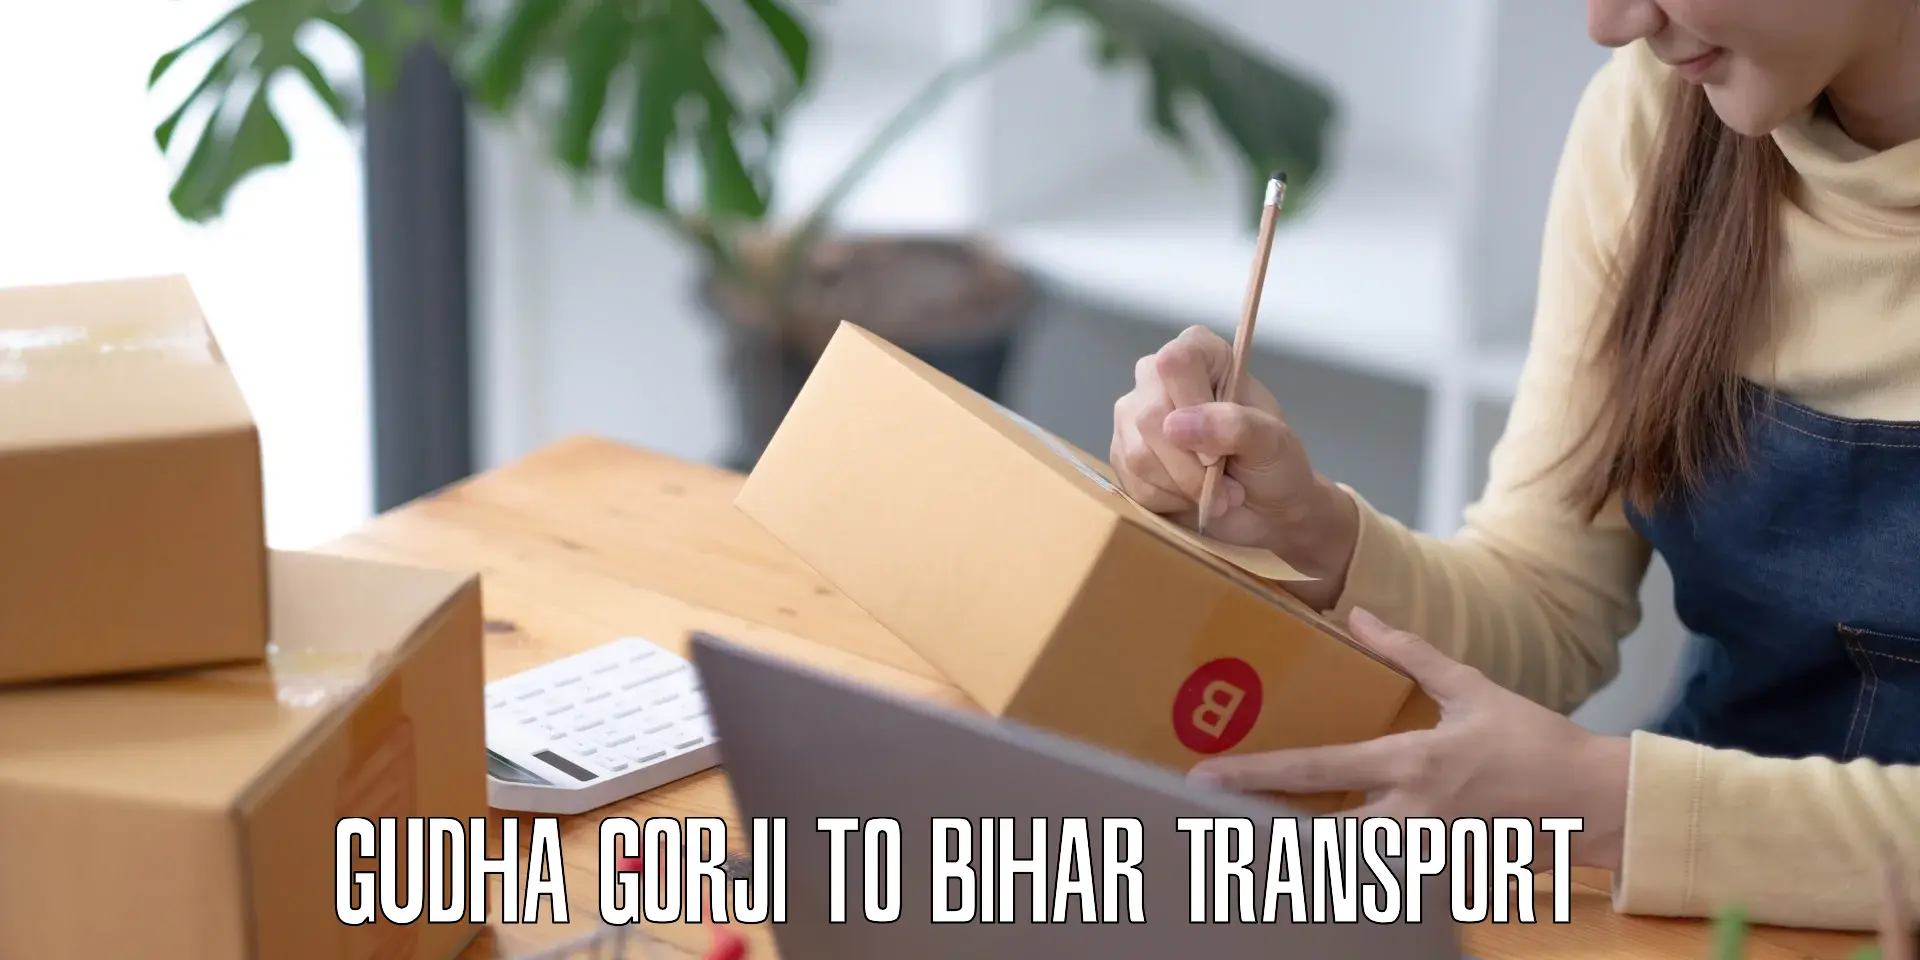 Domestic goods transportation services Gudha Gorji to Bihar